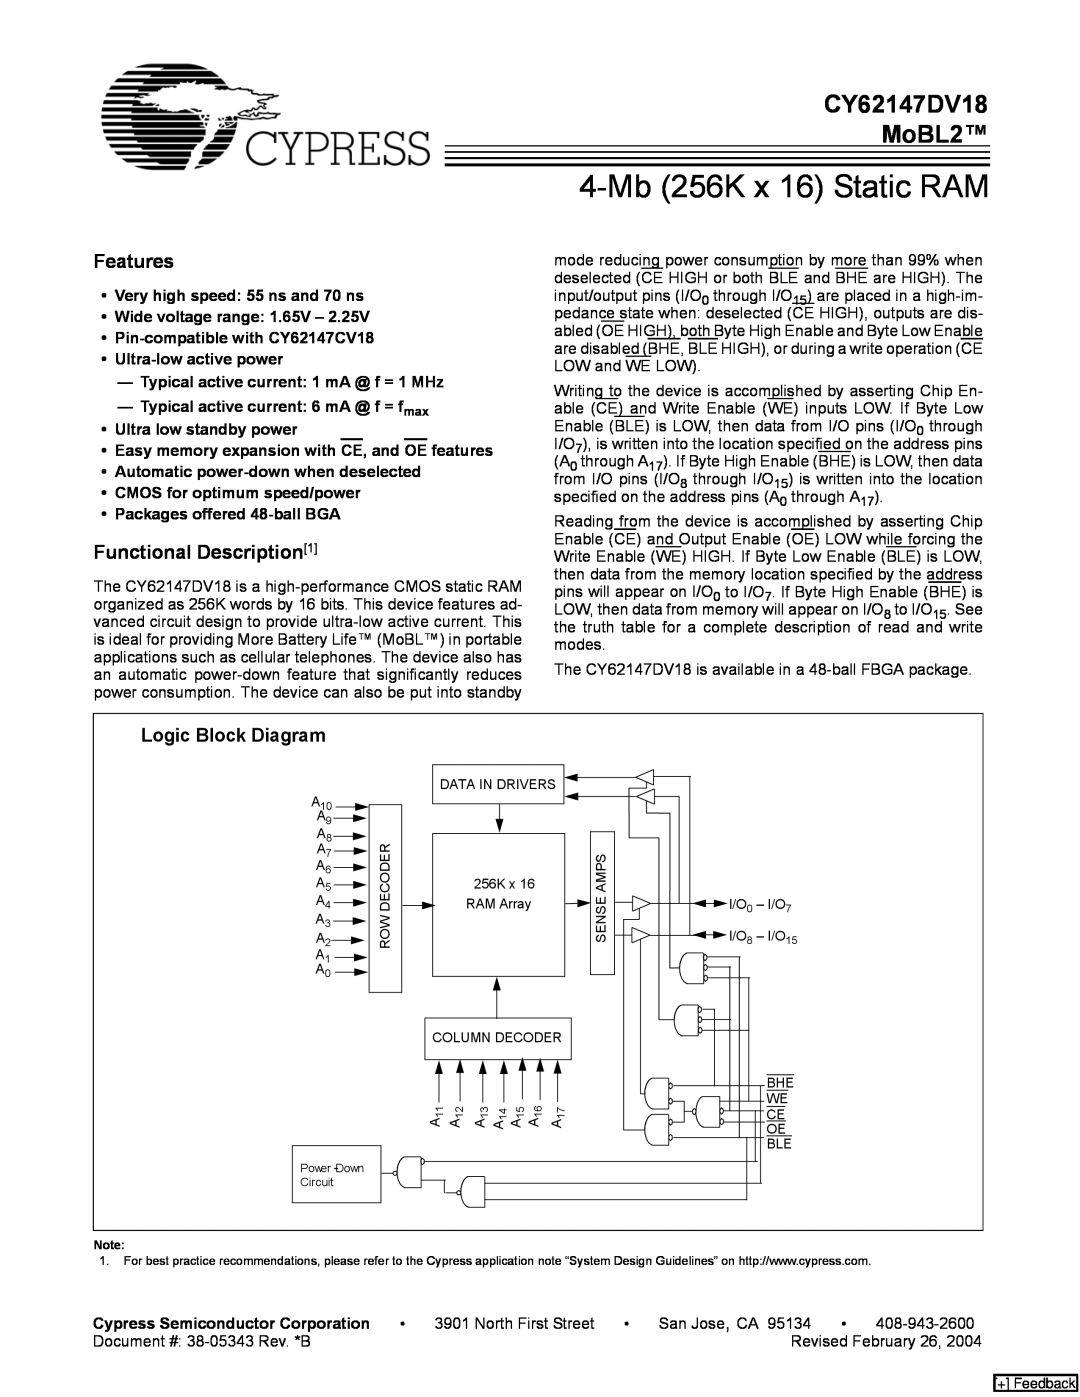 Cypress manual CY62147DV18 MoBL2, Features, Functional Description1, Logic Block Diagram, 4-Mb 256K x 16 Static RAM 